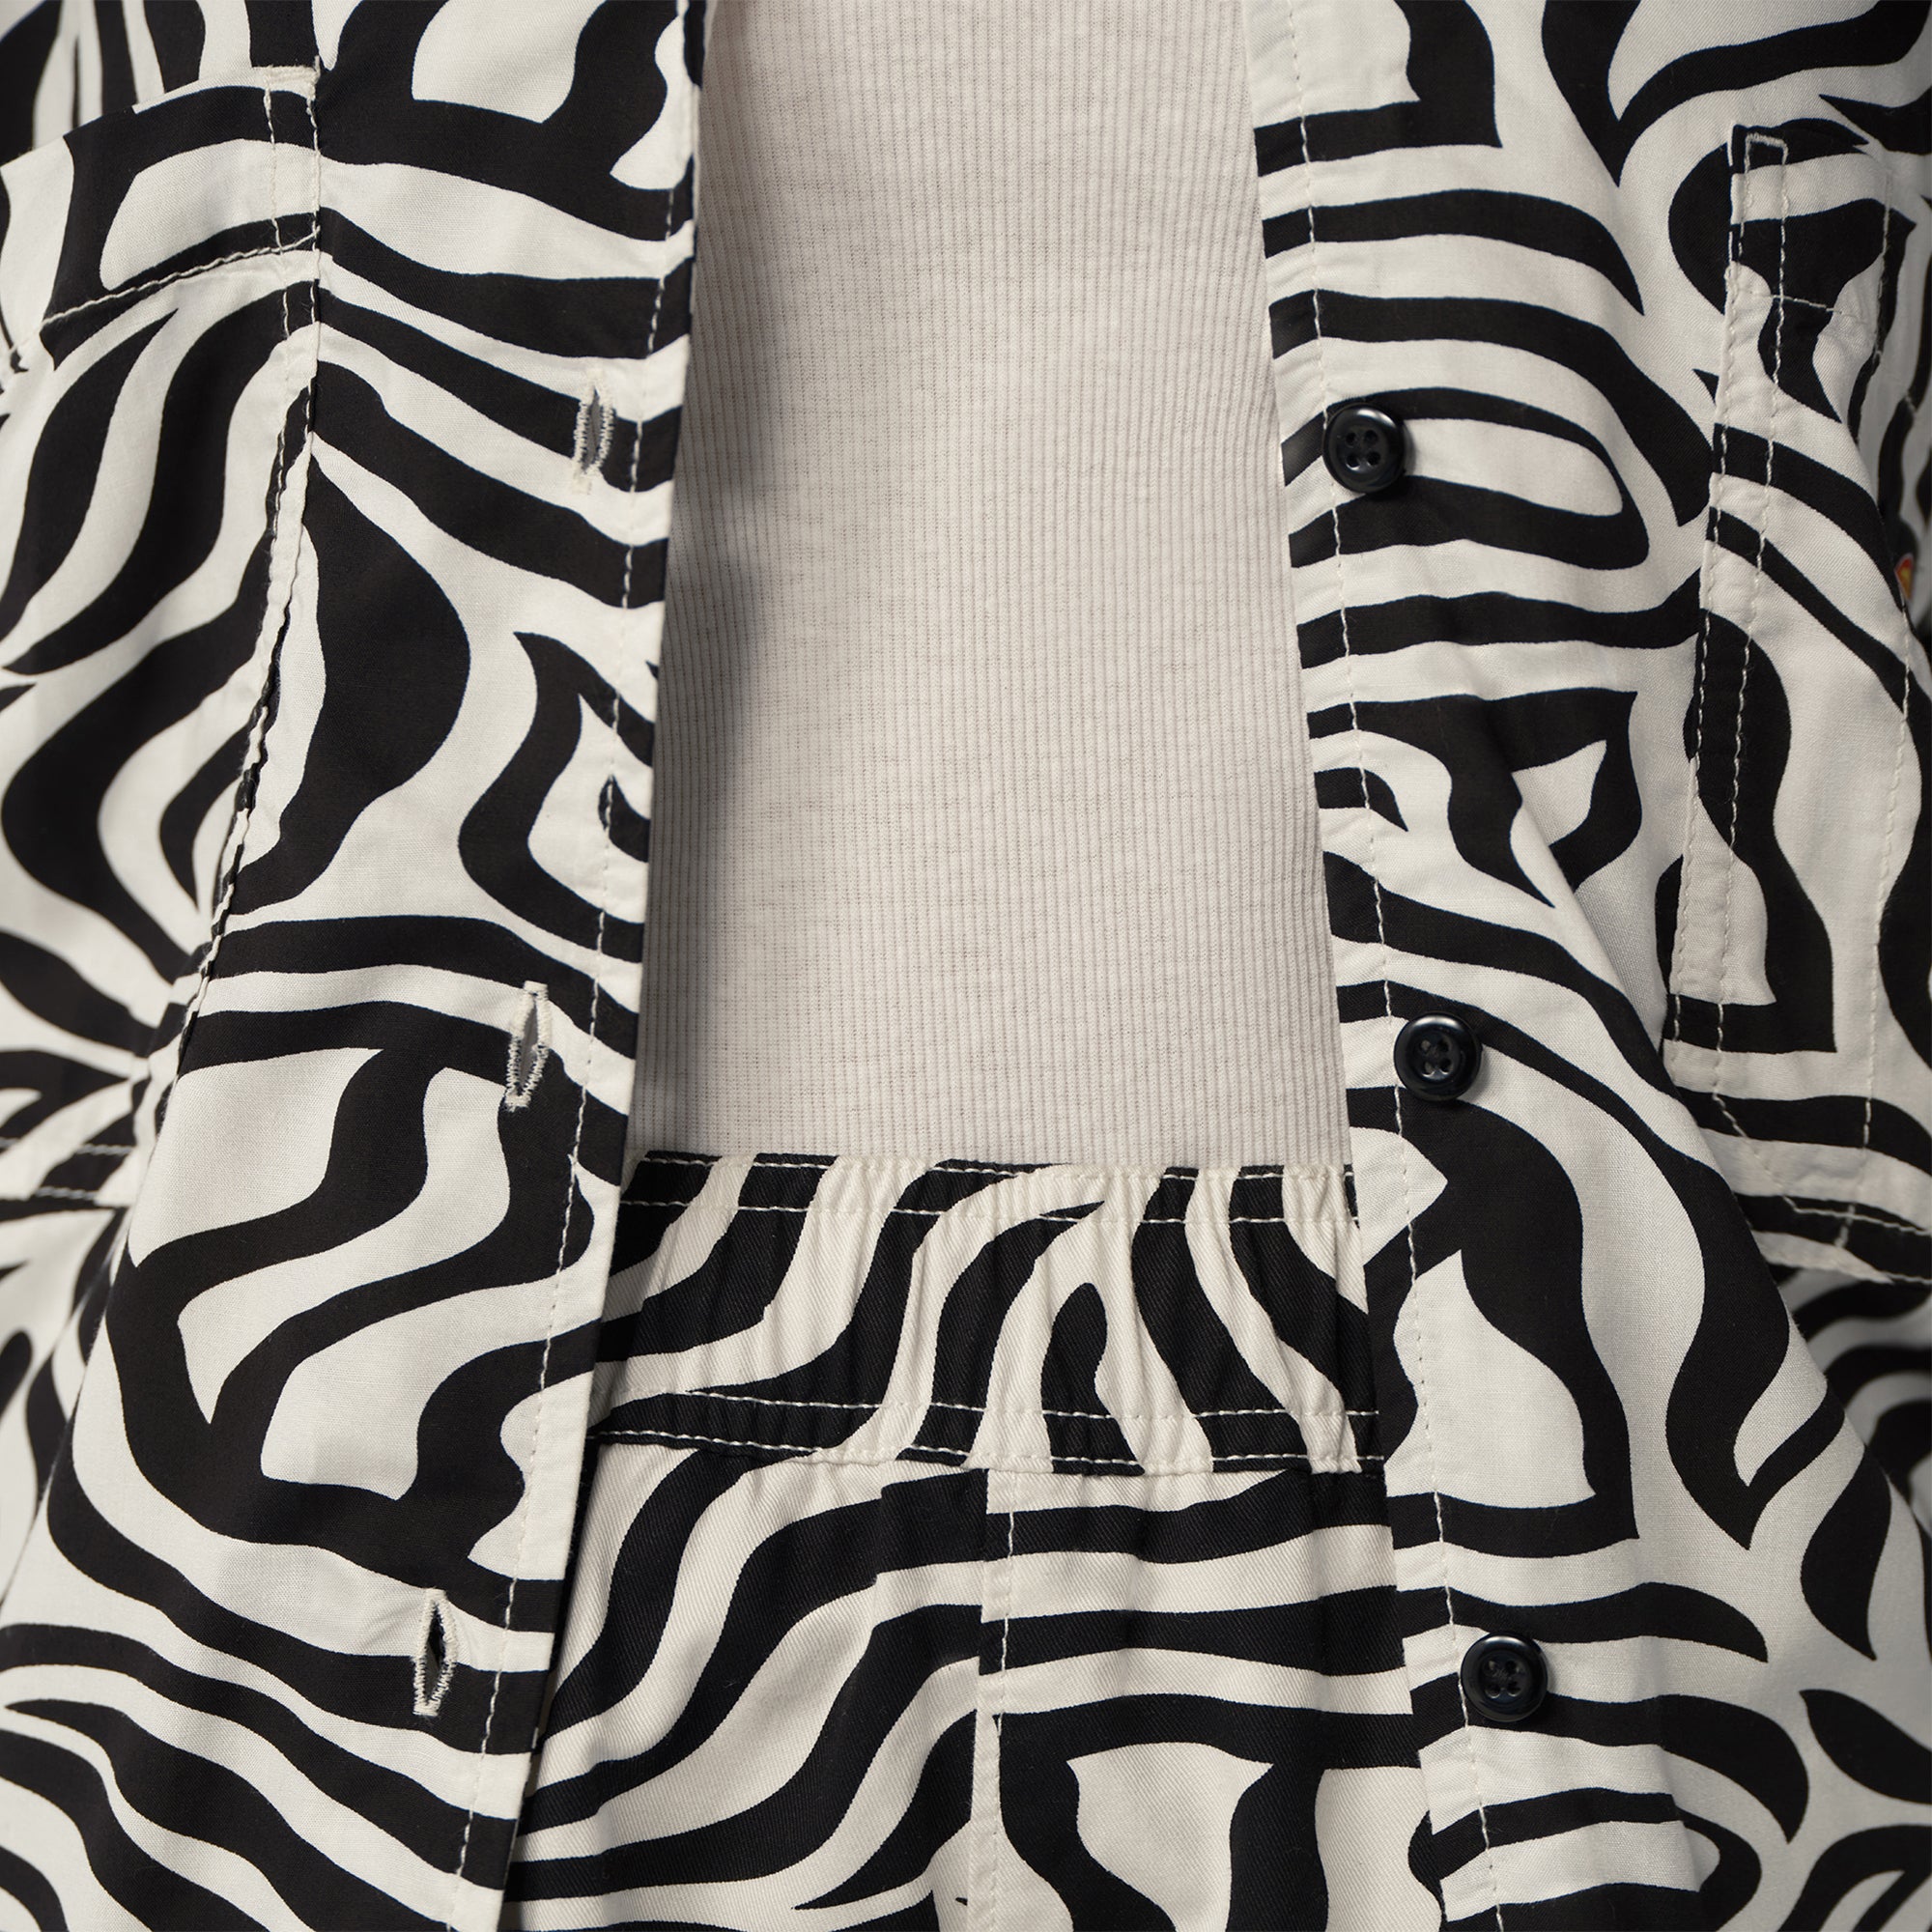 Relaxed Fit Zebra Print Work Shirt